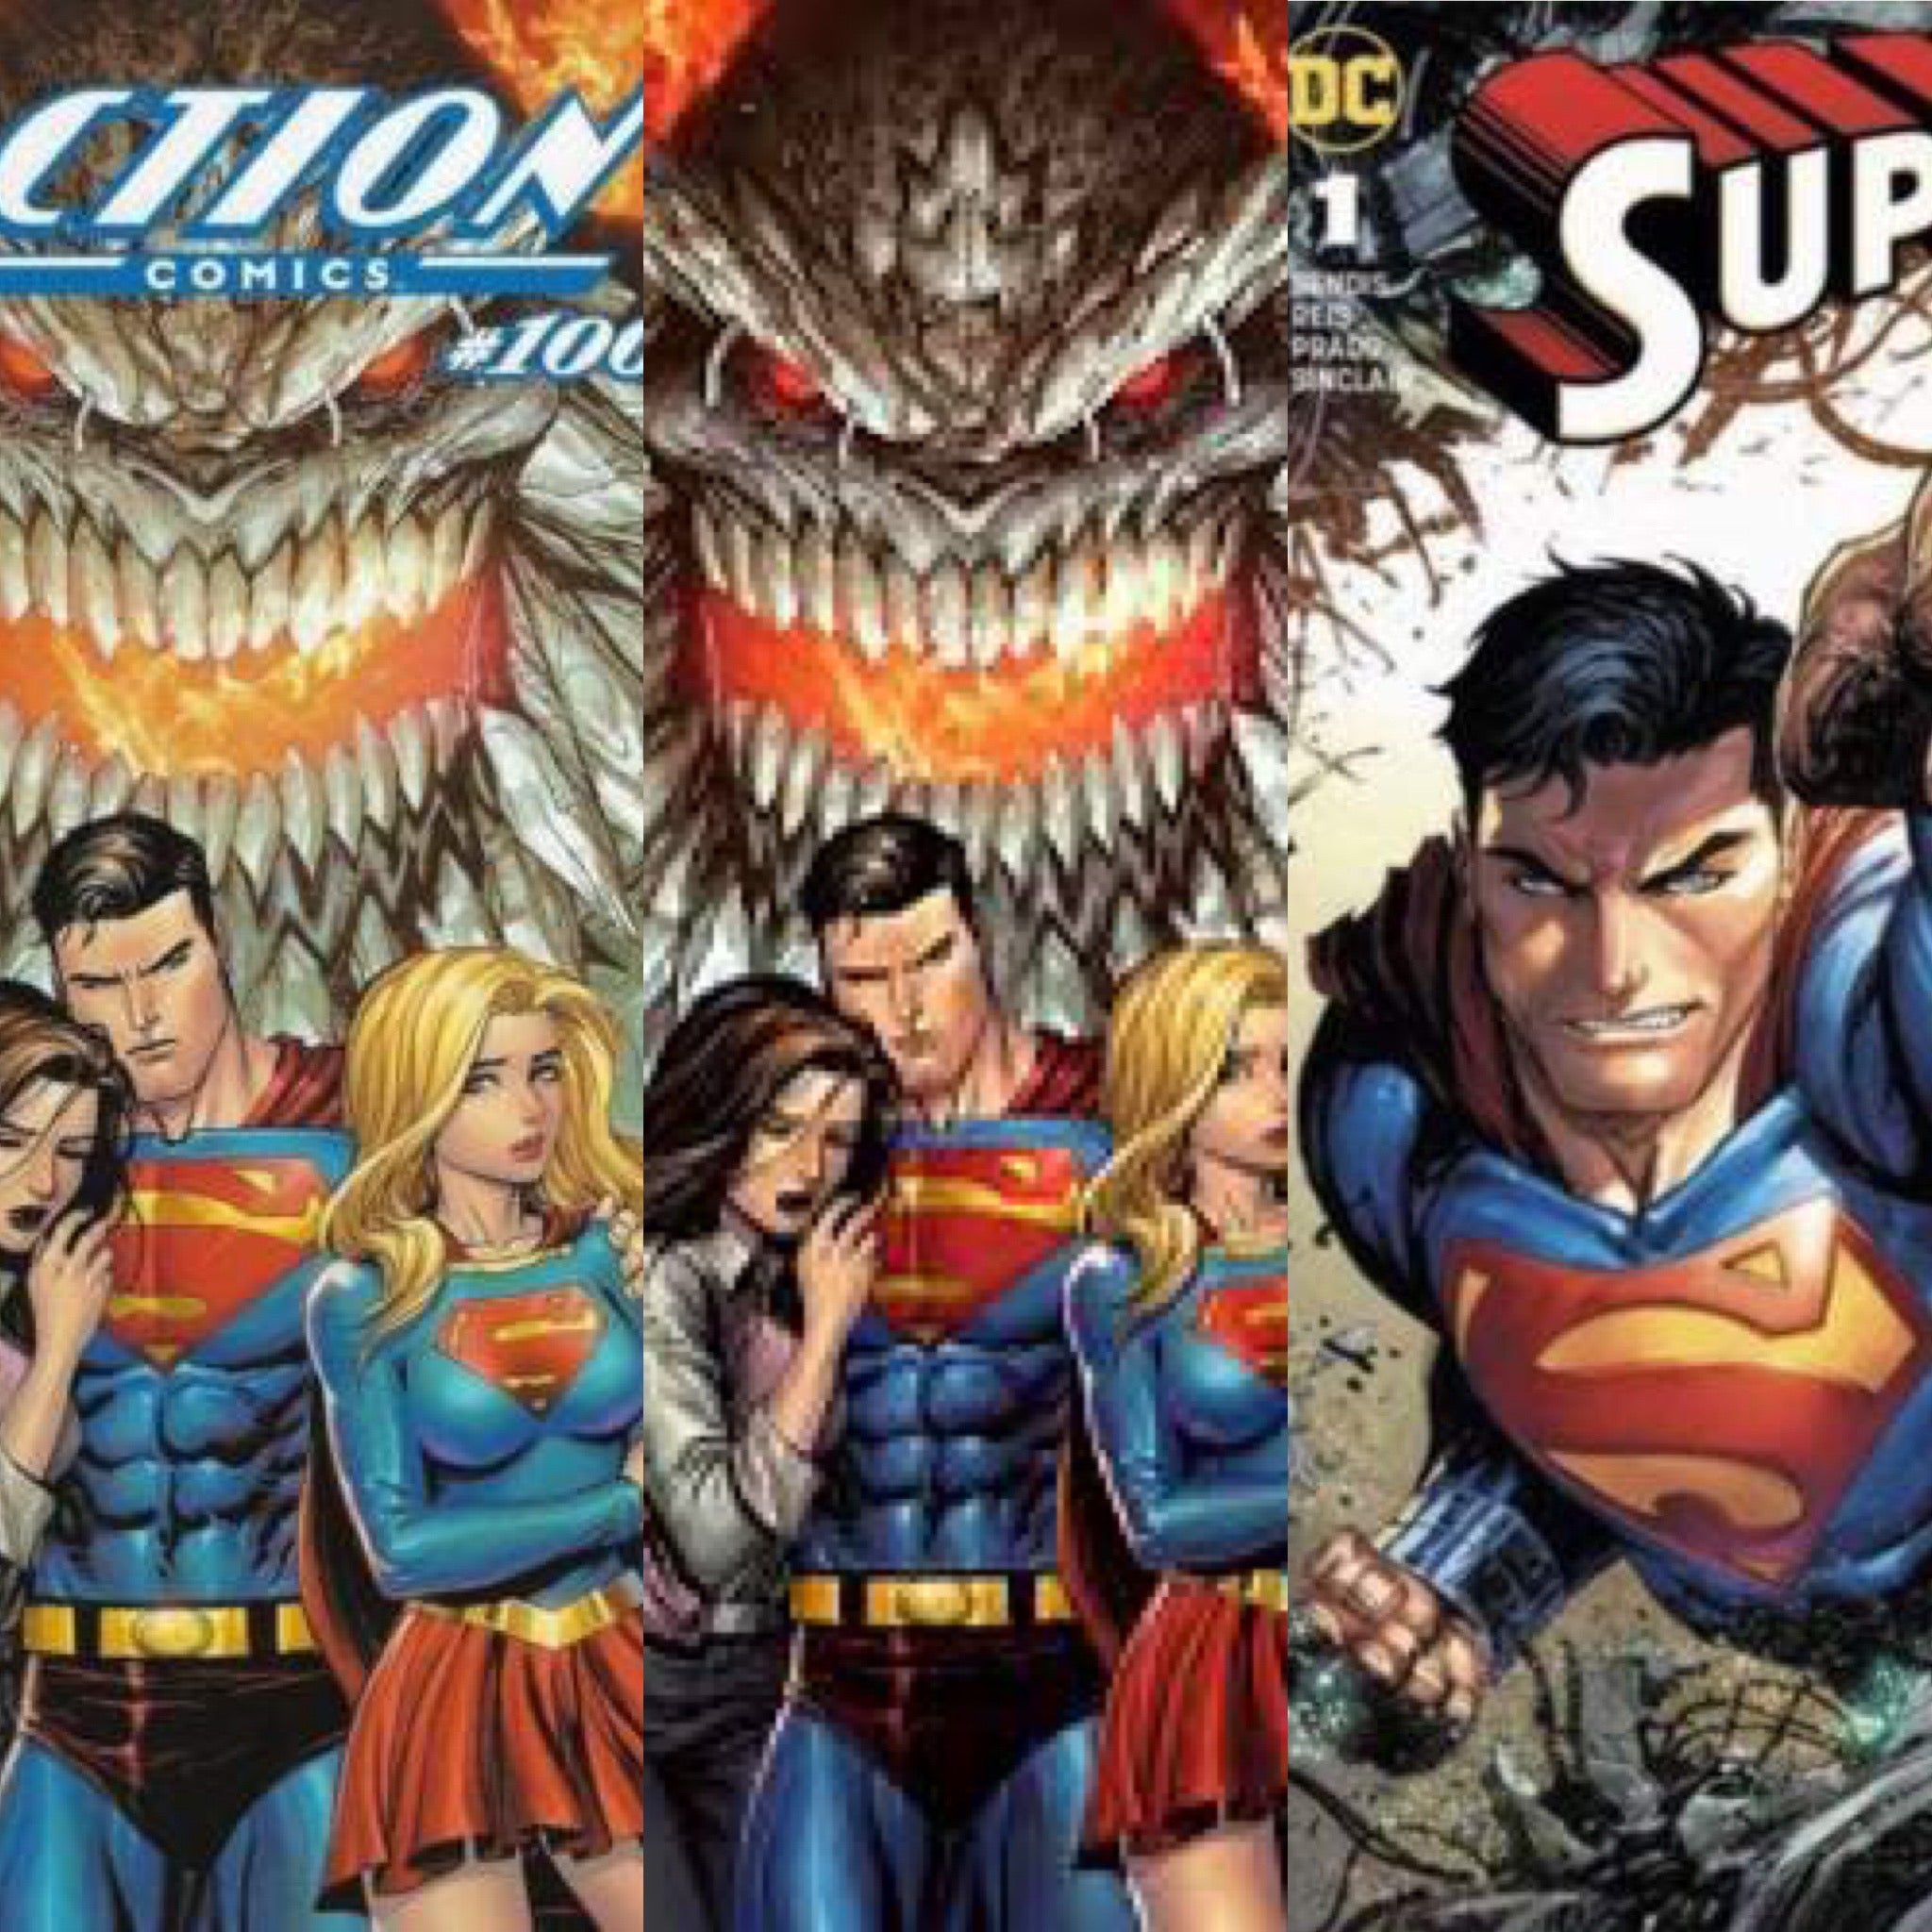 (3 pack) Action Comics #1000/Superman #1